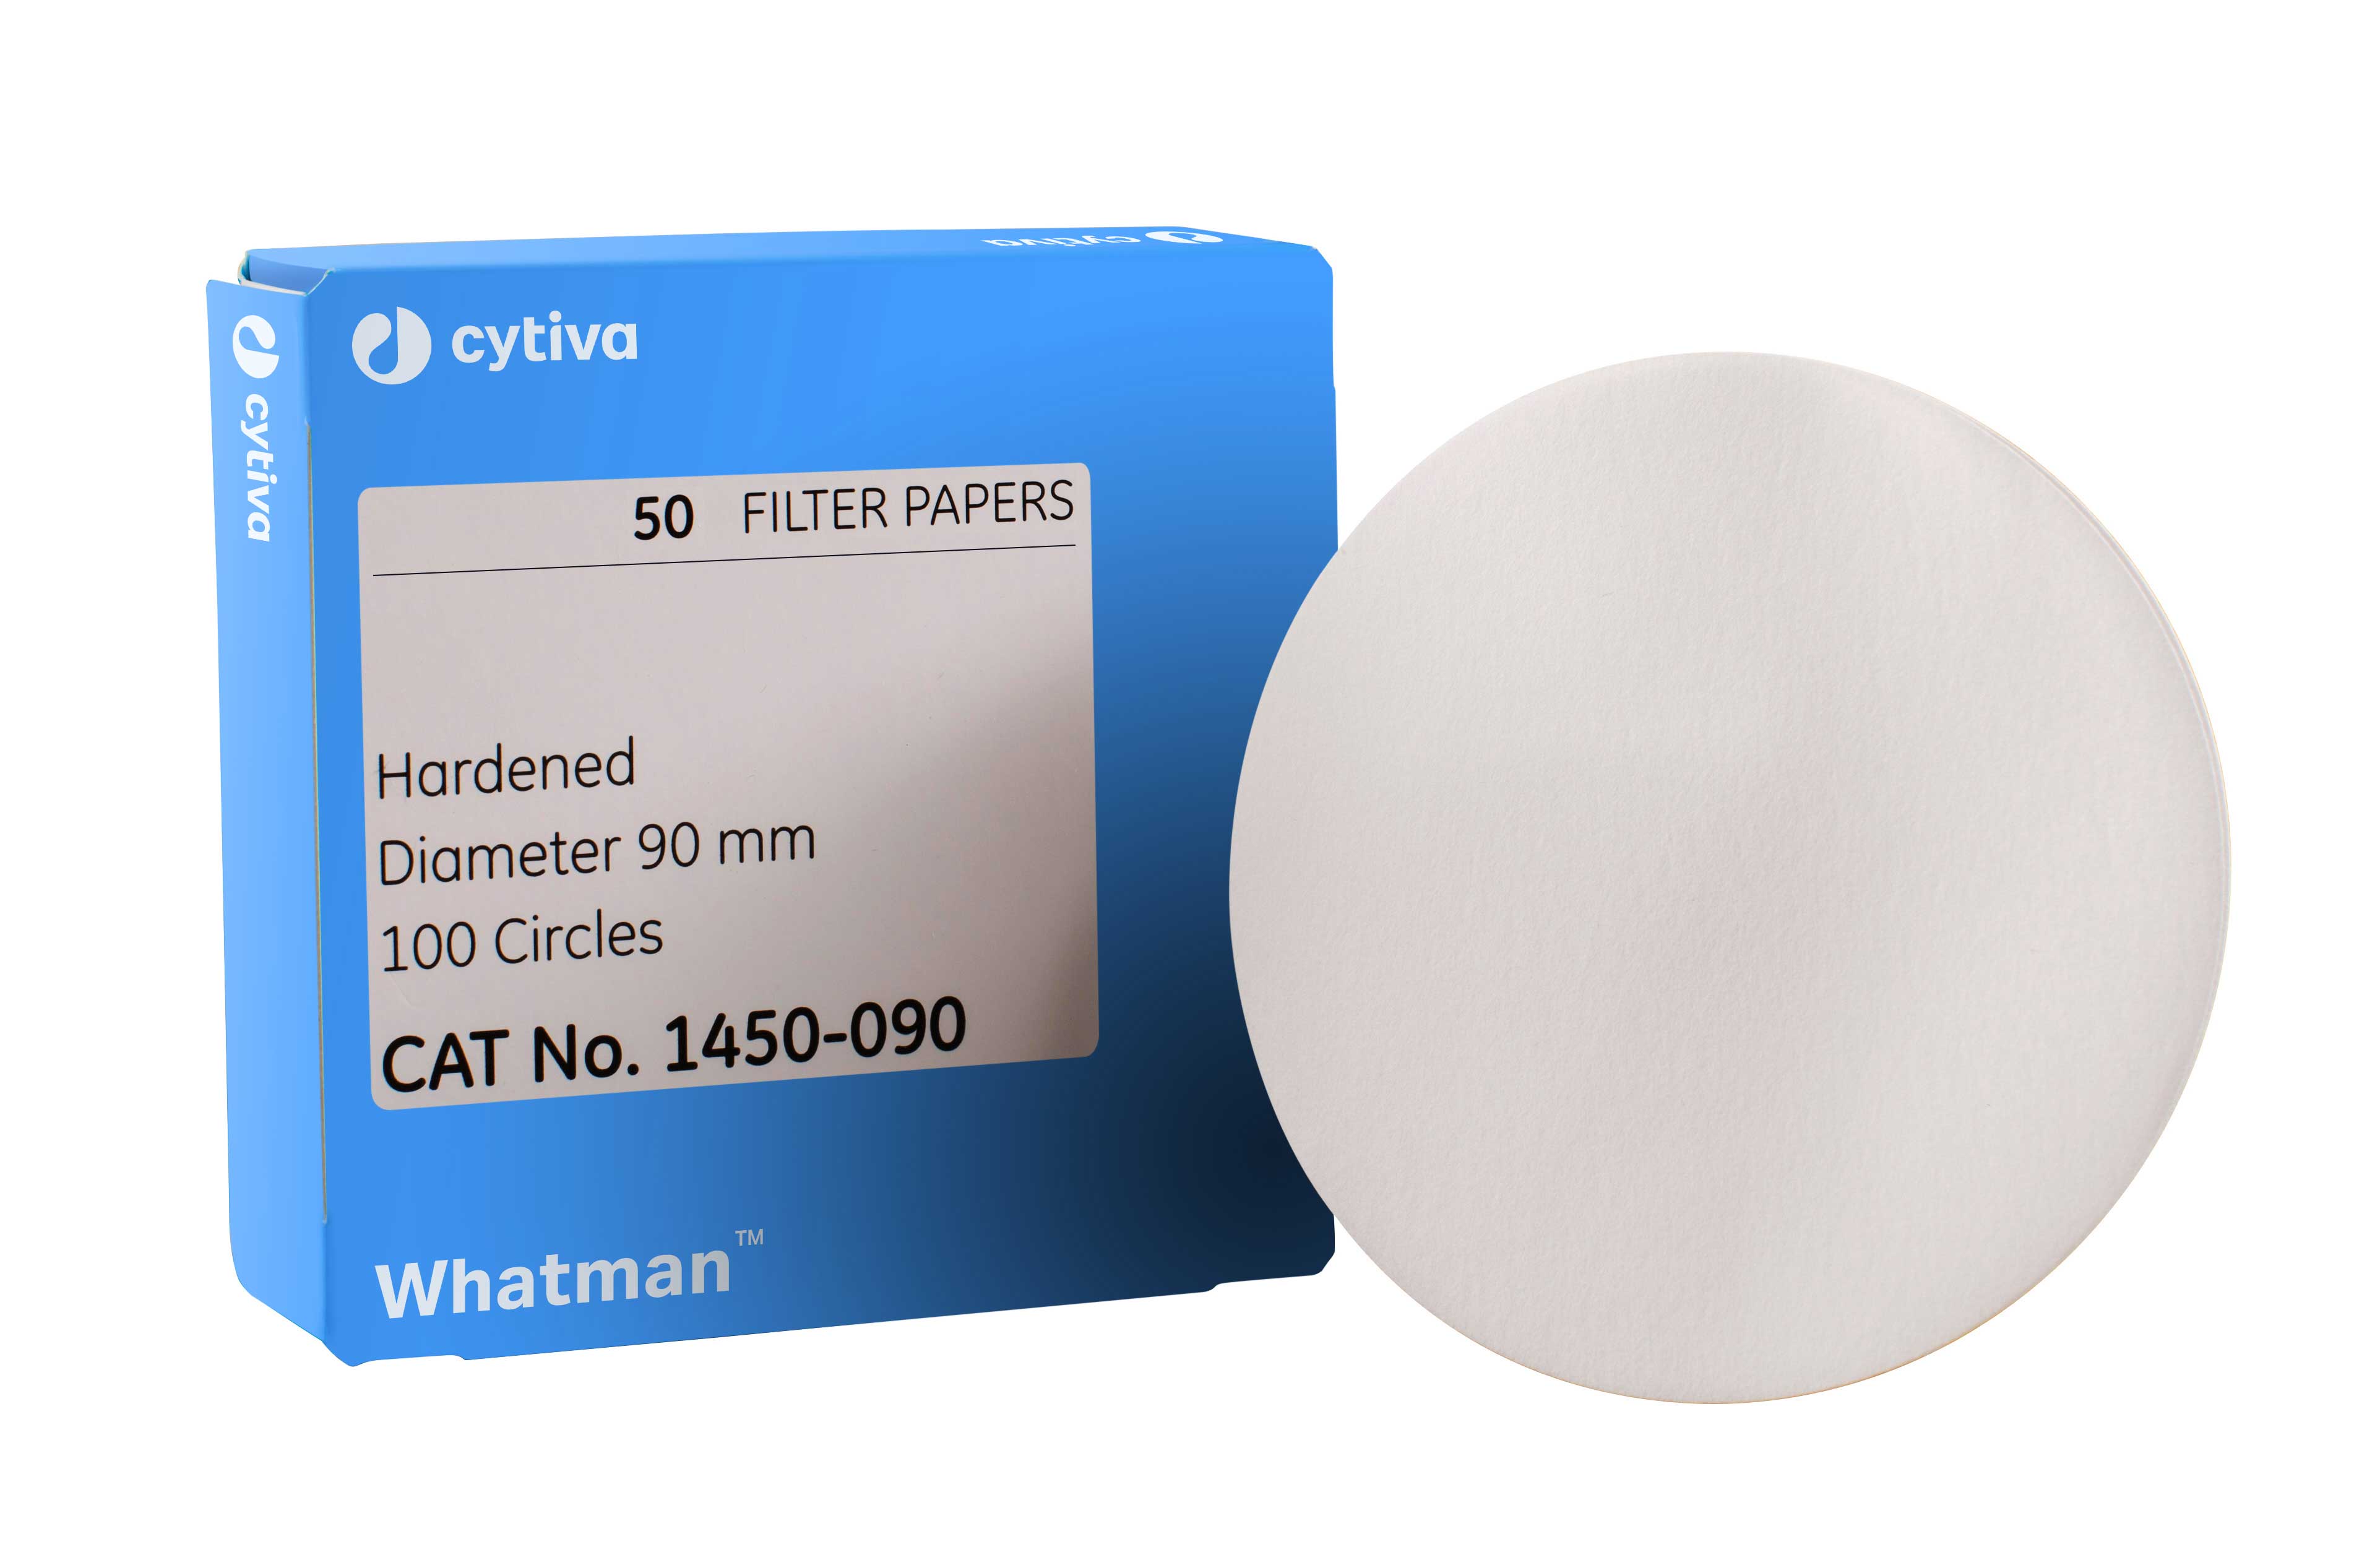 Filtro de papel de celulosa pura. Whatman™ (Cytiva). Disco Grado 50 Celulosa pura sin cenizas. Ø (mm): 70. Retención típica (µm): 2,7